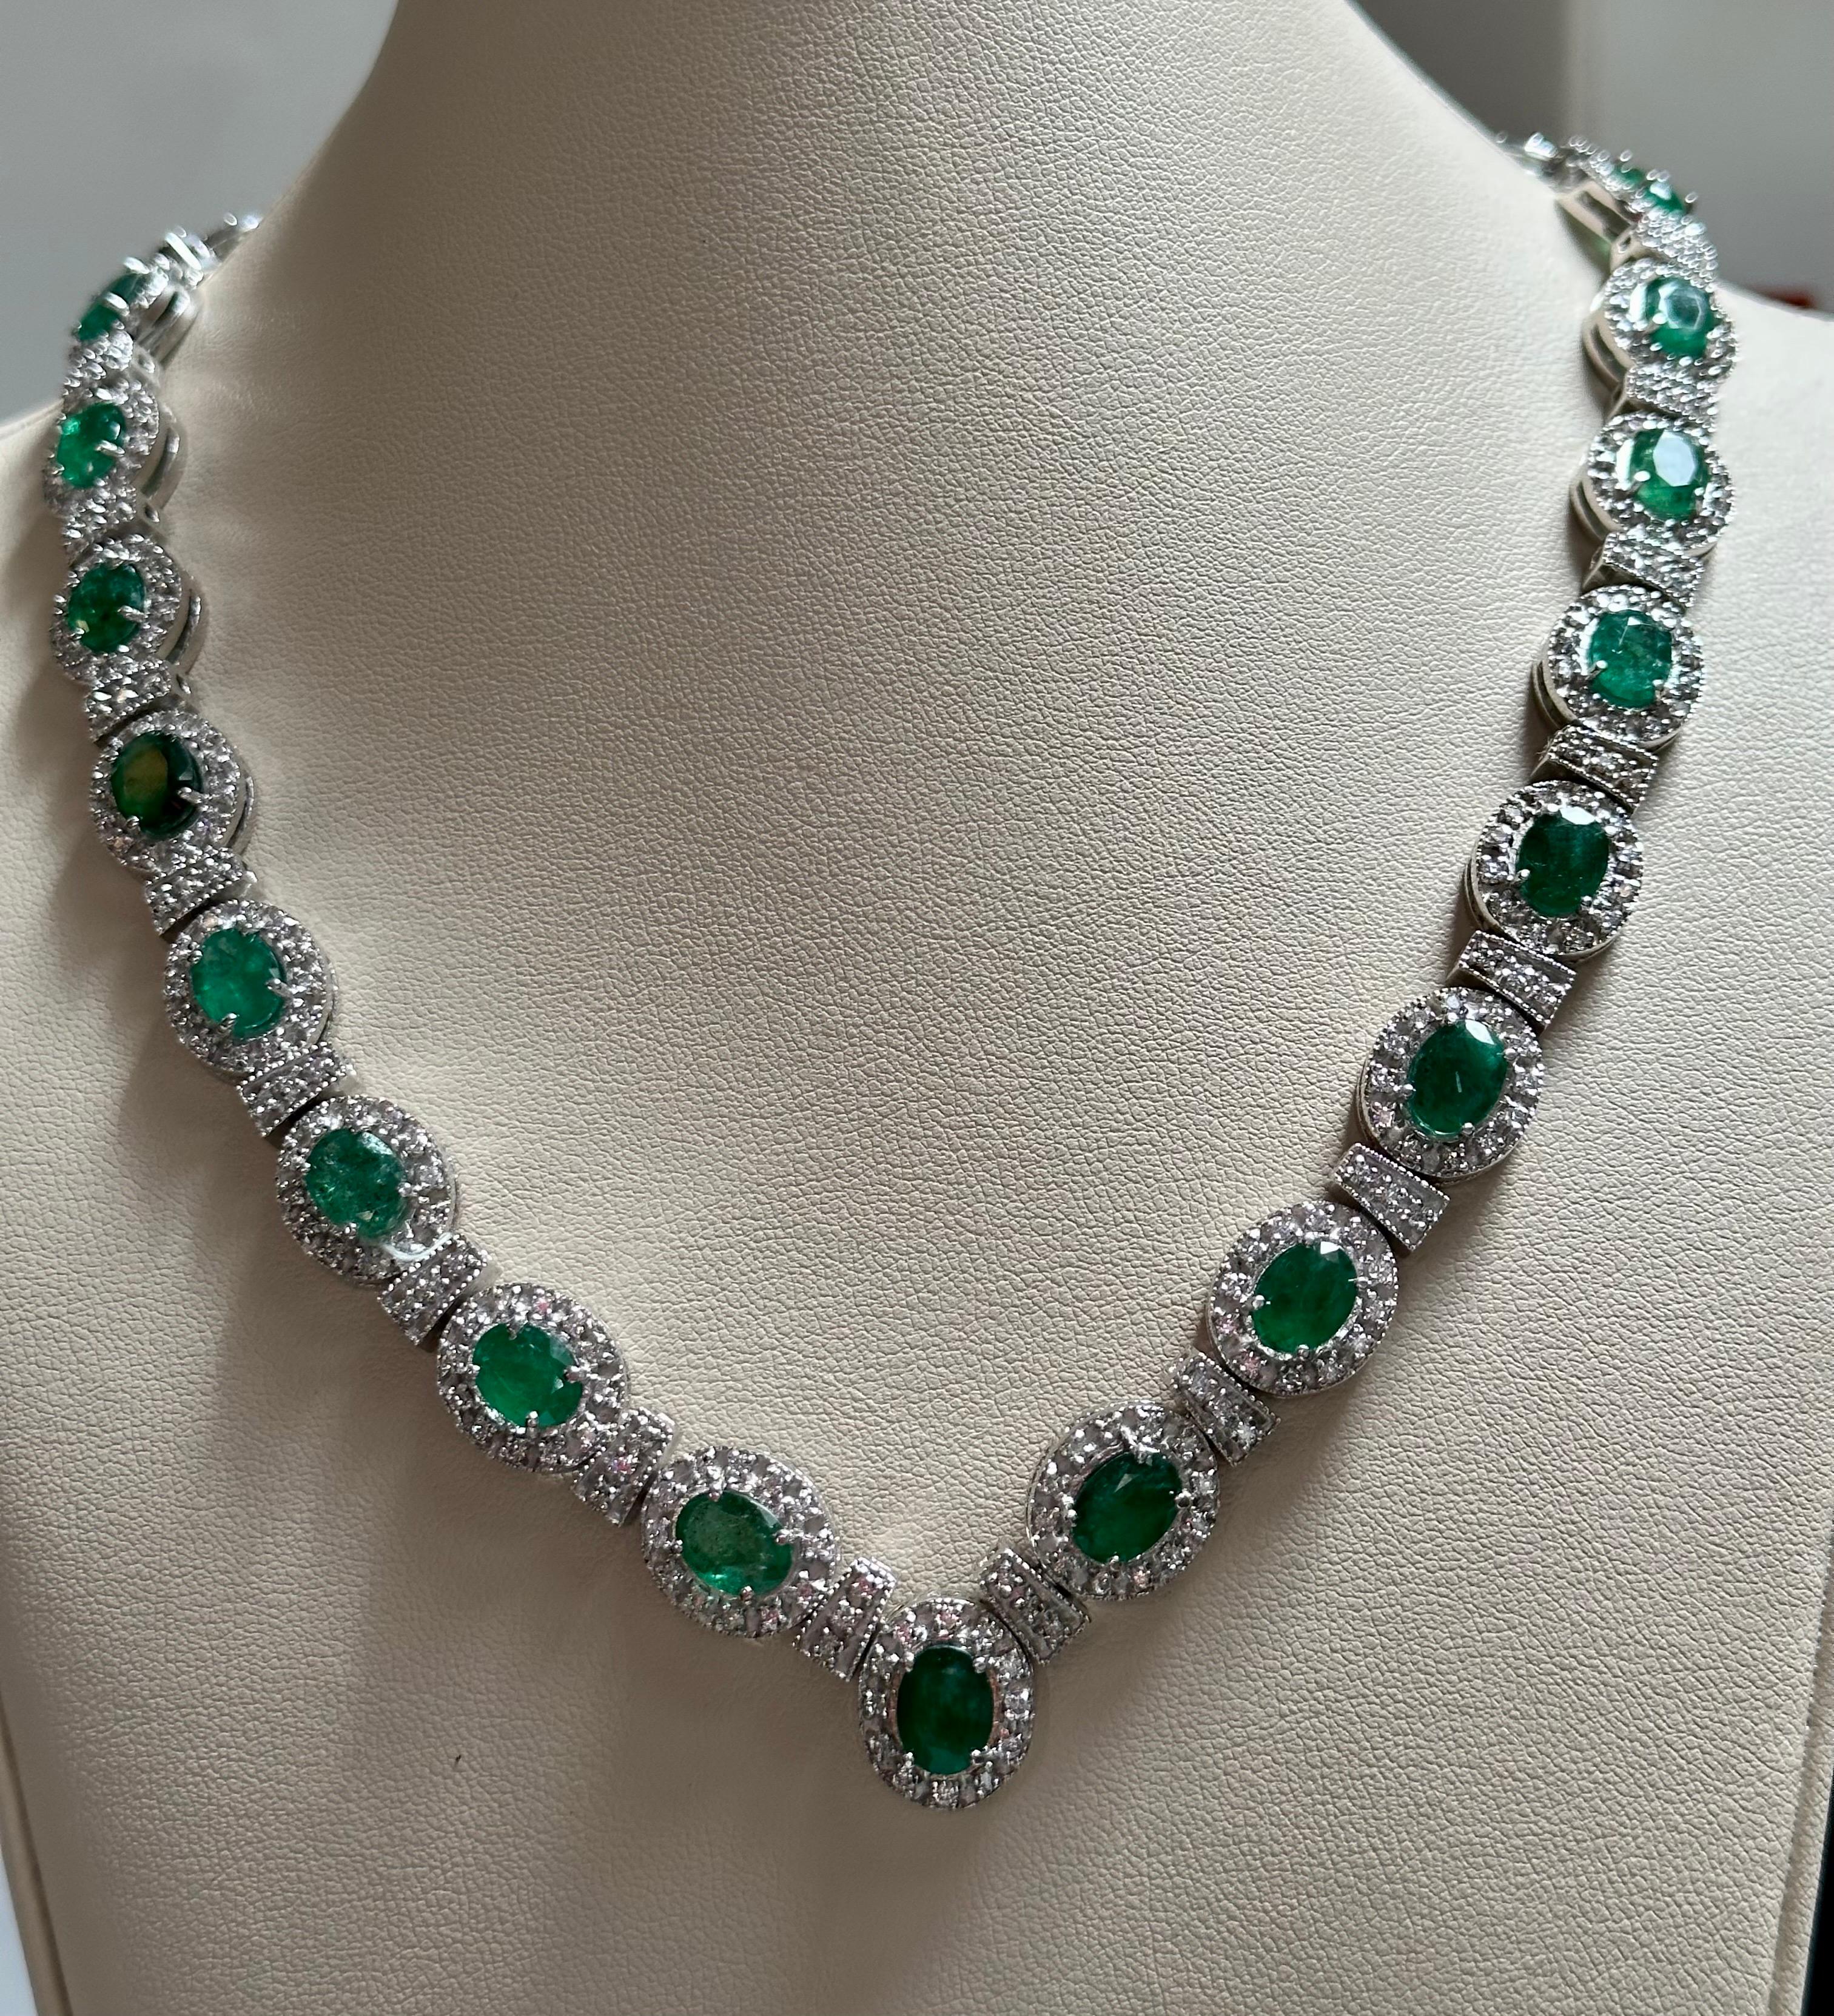 28 Carat Oval Shape Natural Emerald & 5 Carat Diamond Necklace in 14 Karat Gold For Sale 1